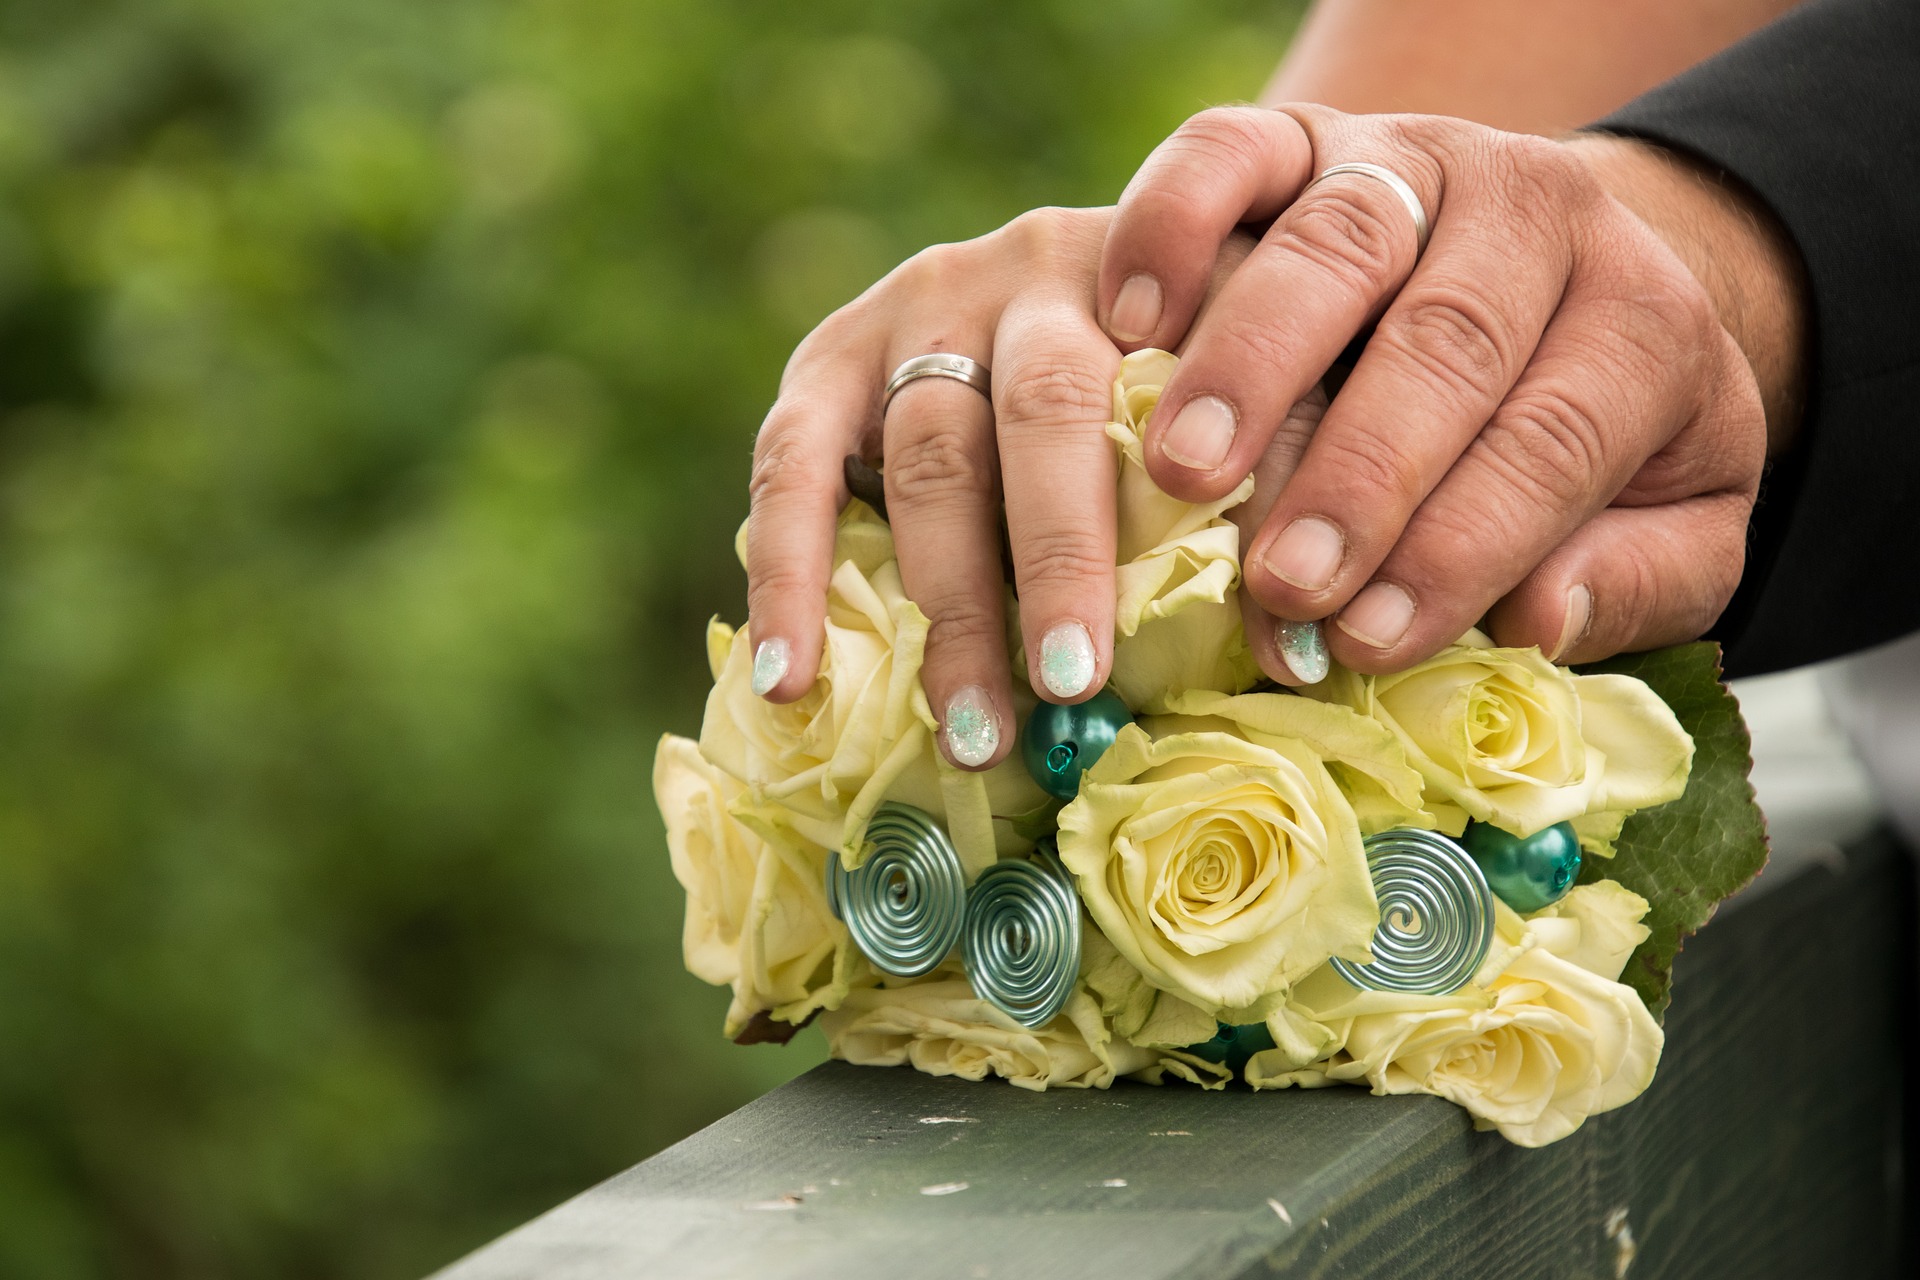 wedding-3414707_1920 (c) pixabay.com